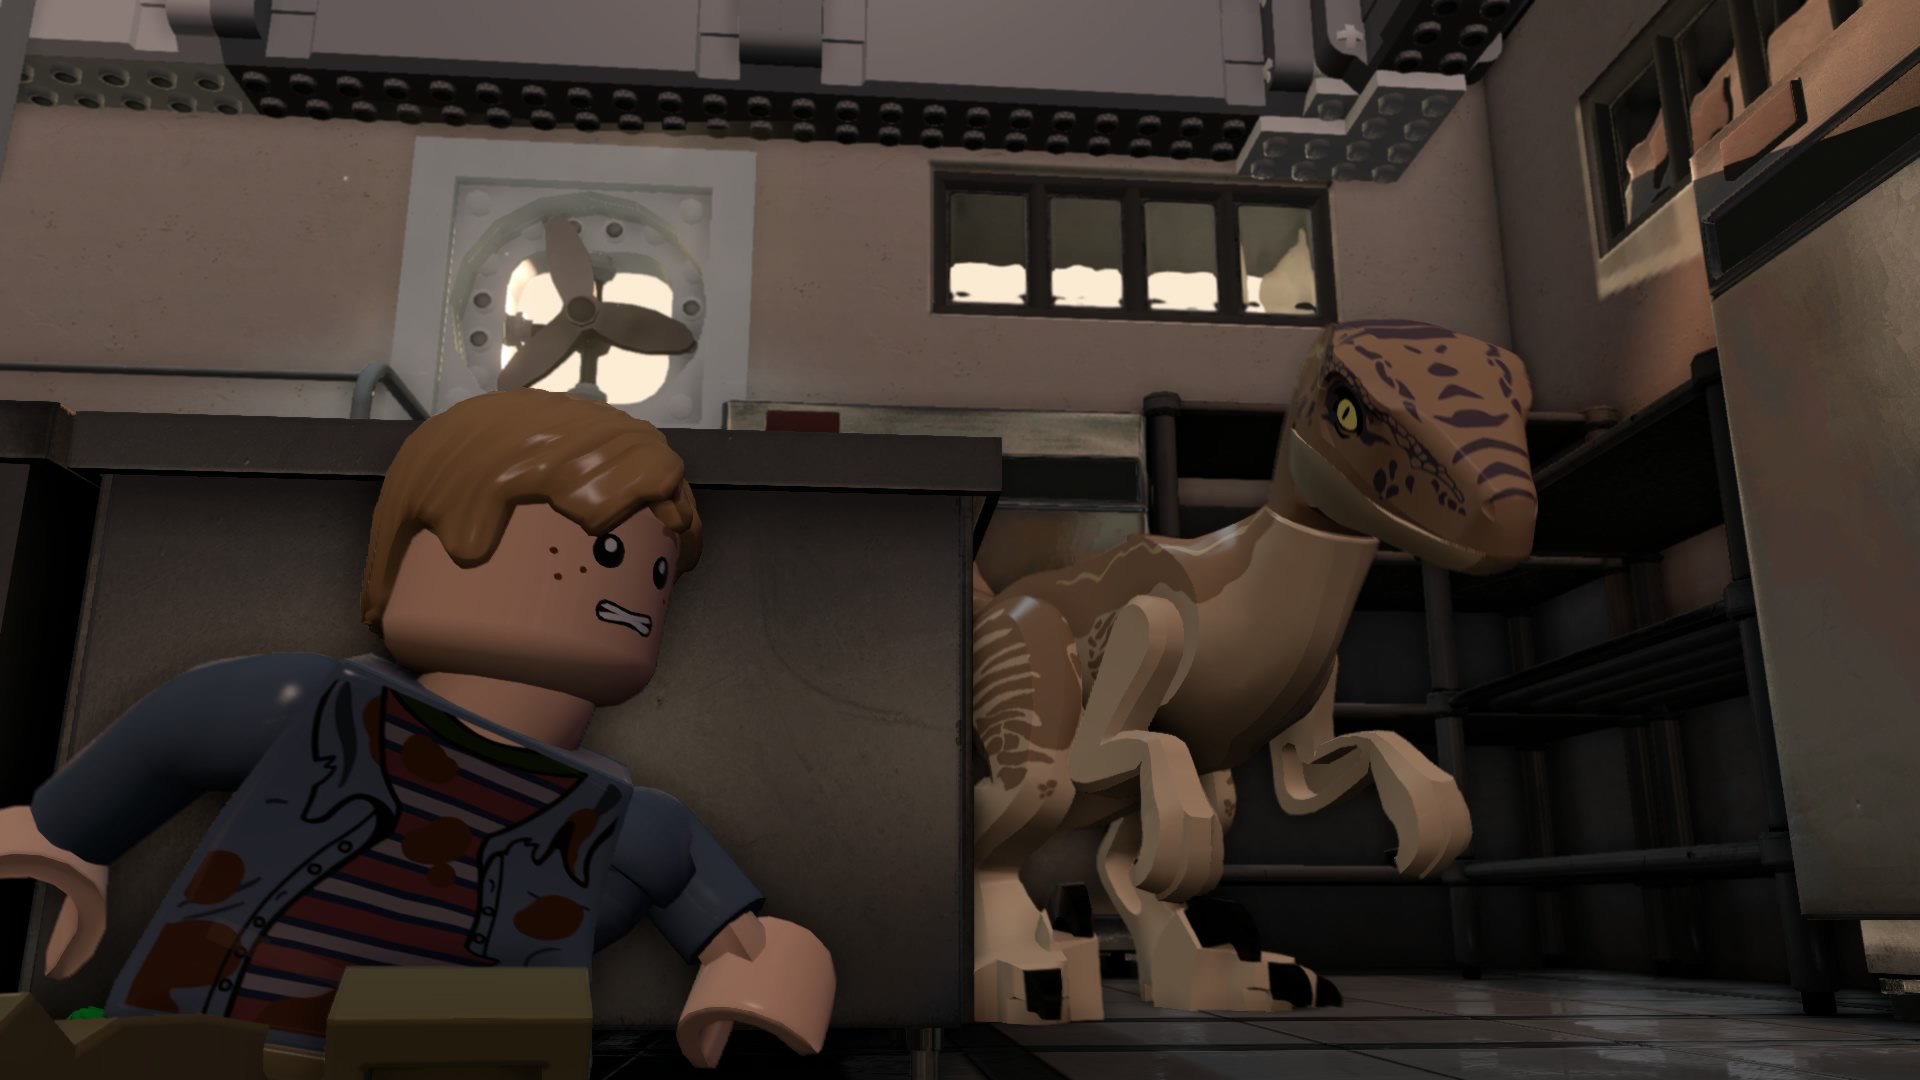 Save 75% on LEGO® Jurassic World on Steam